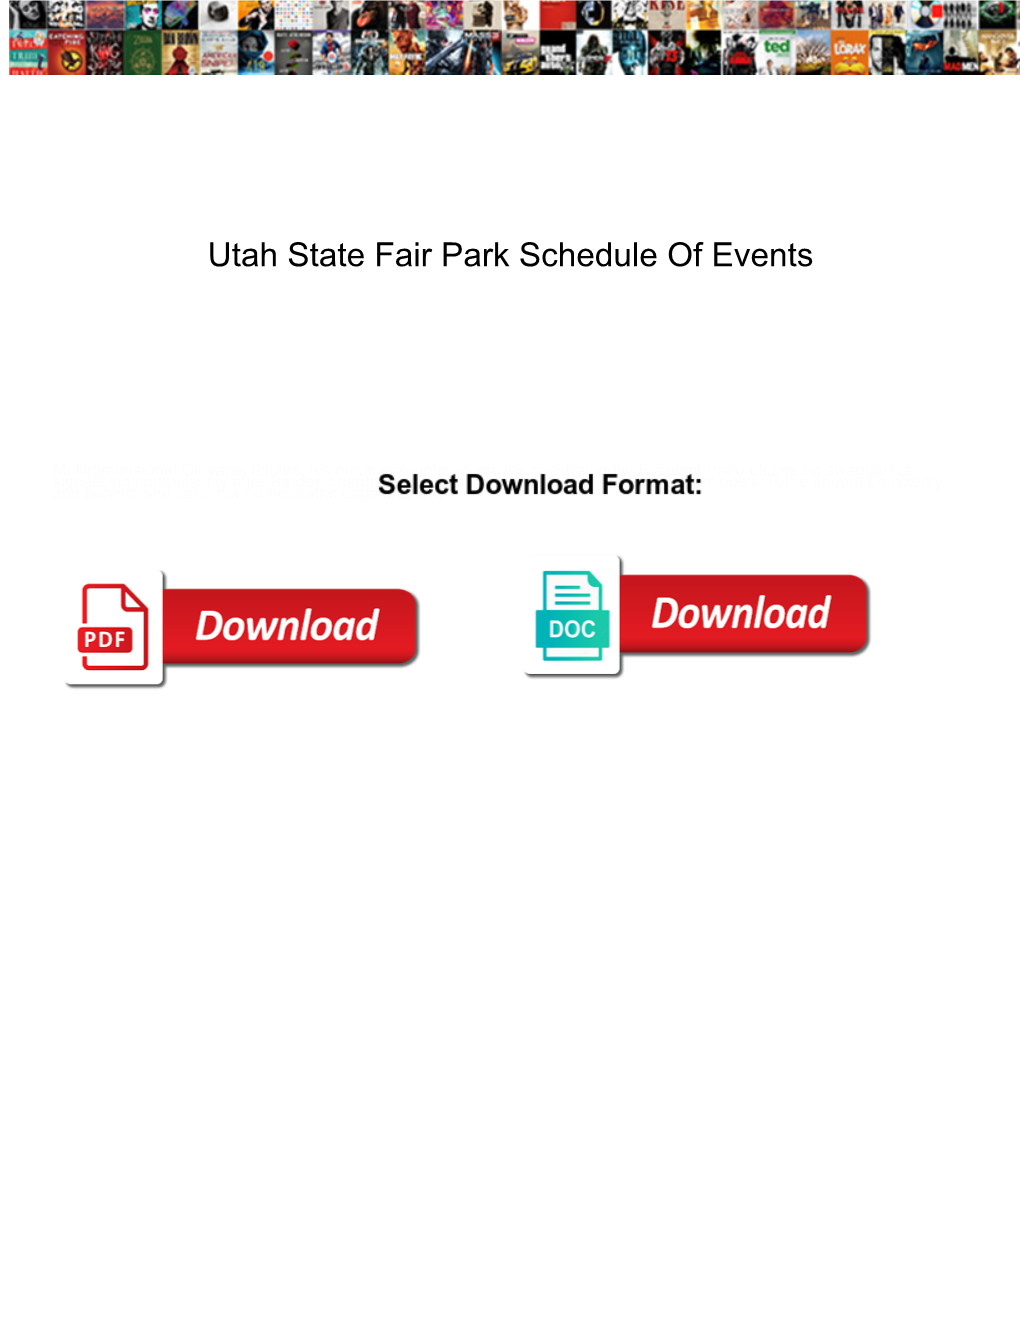 Utah State Fair Park Schedule of Events